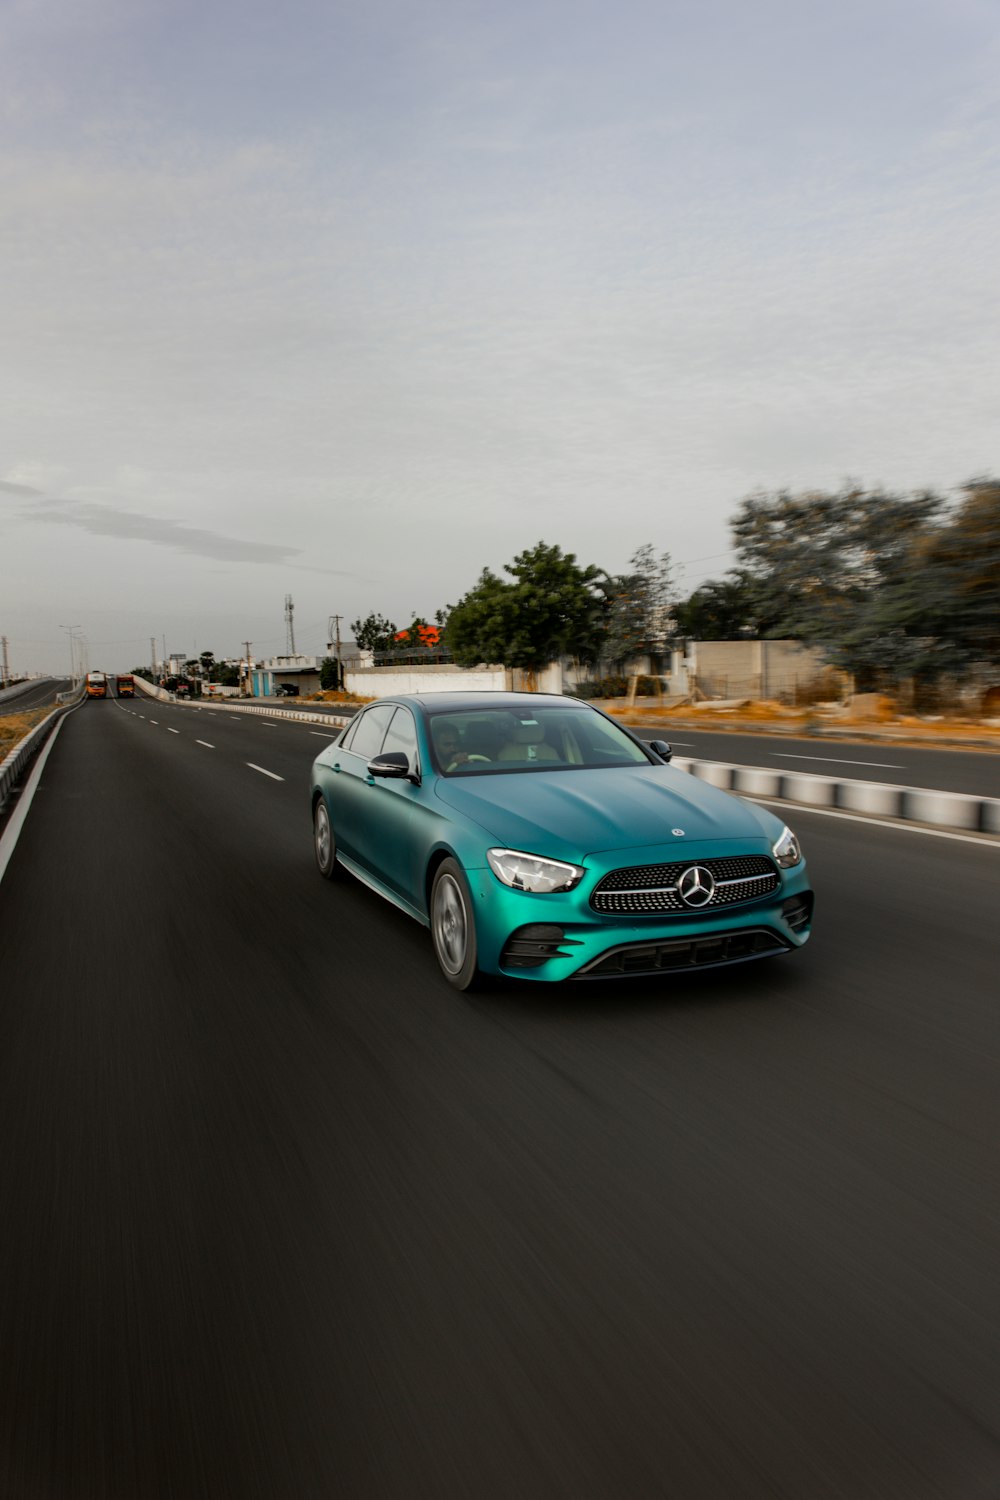 Una Mercedes CLA blu che percorre un'autostrada